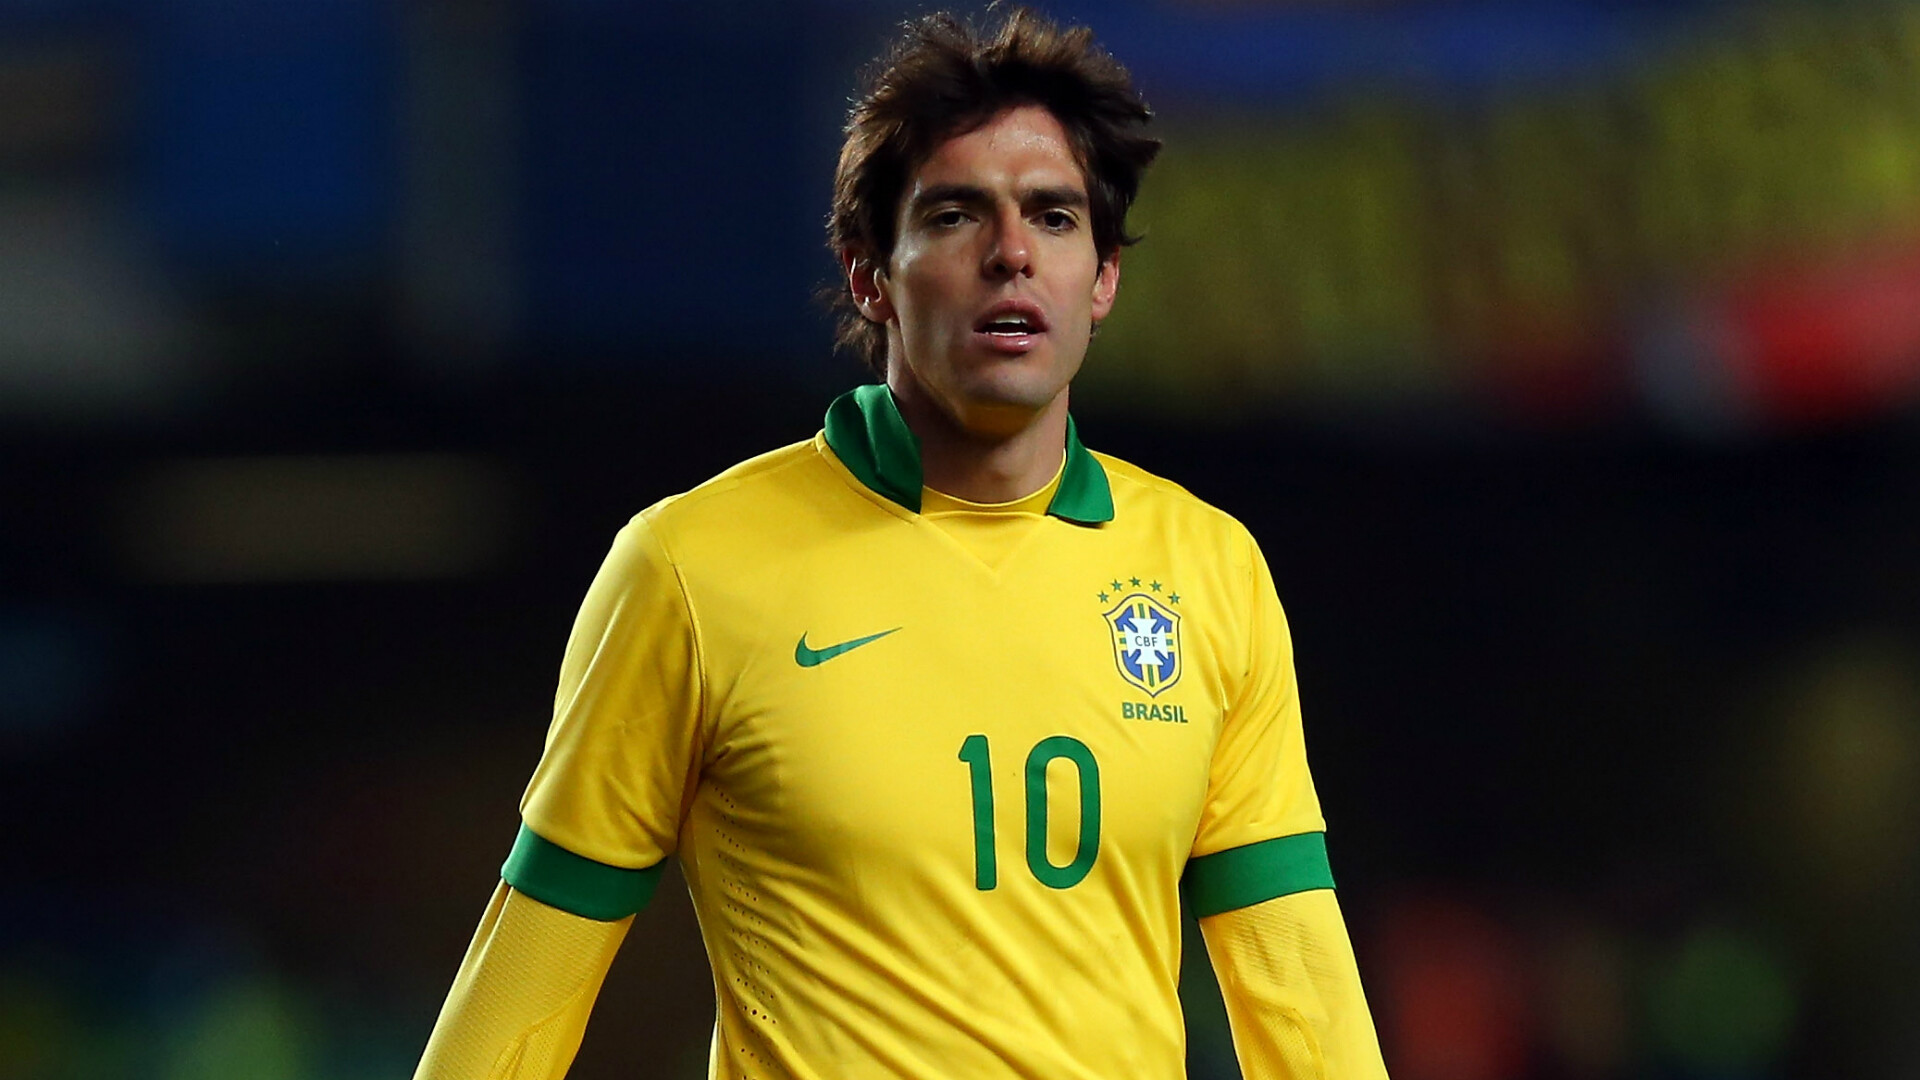 Kaká: Brazil football team, He was named the 2005 UEFA Club Football Best Midfielder. 1920x1080 Full HD Wallpaper.